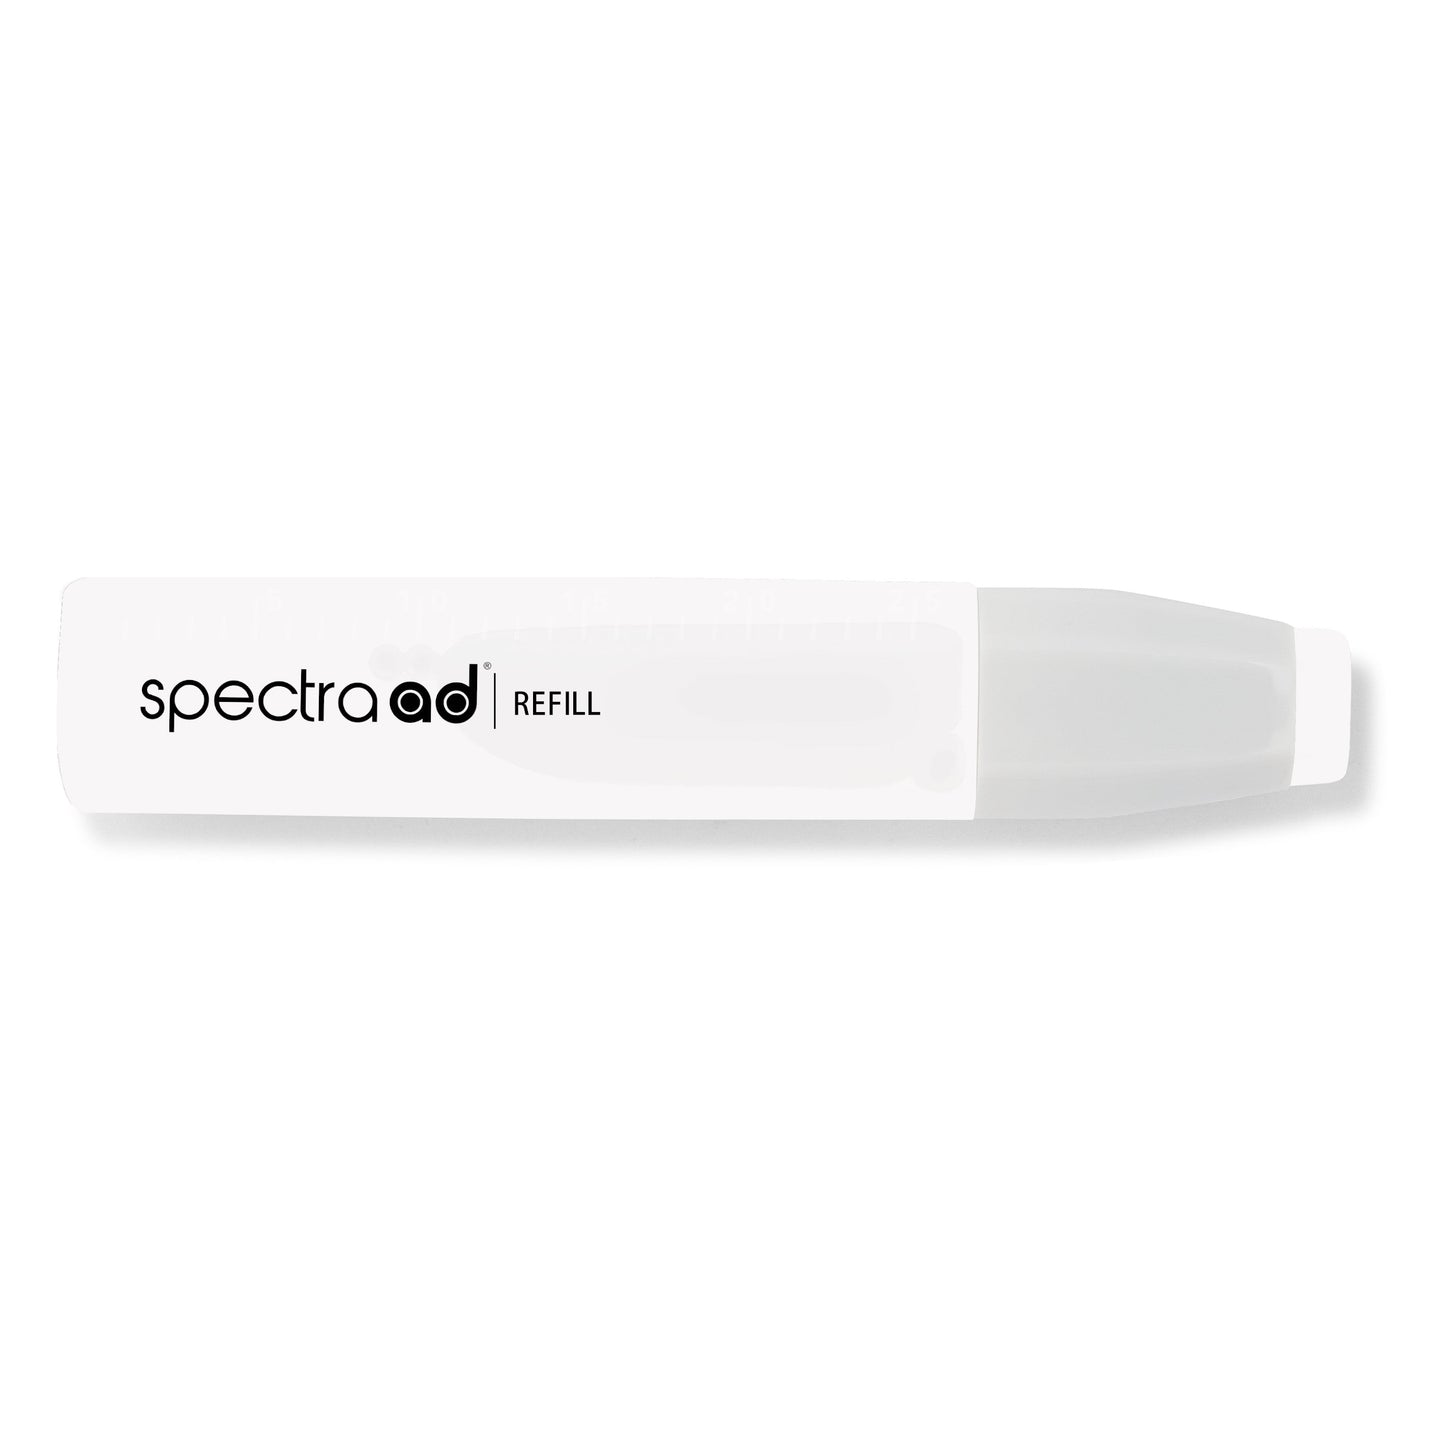 053 - Warm Gray 10% - Spectra AD Refill Bottle